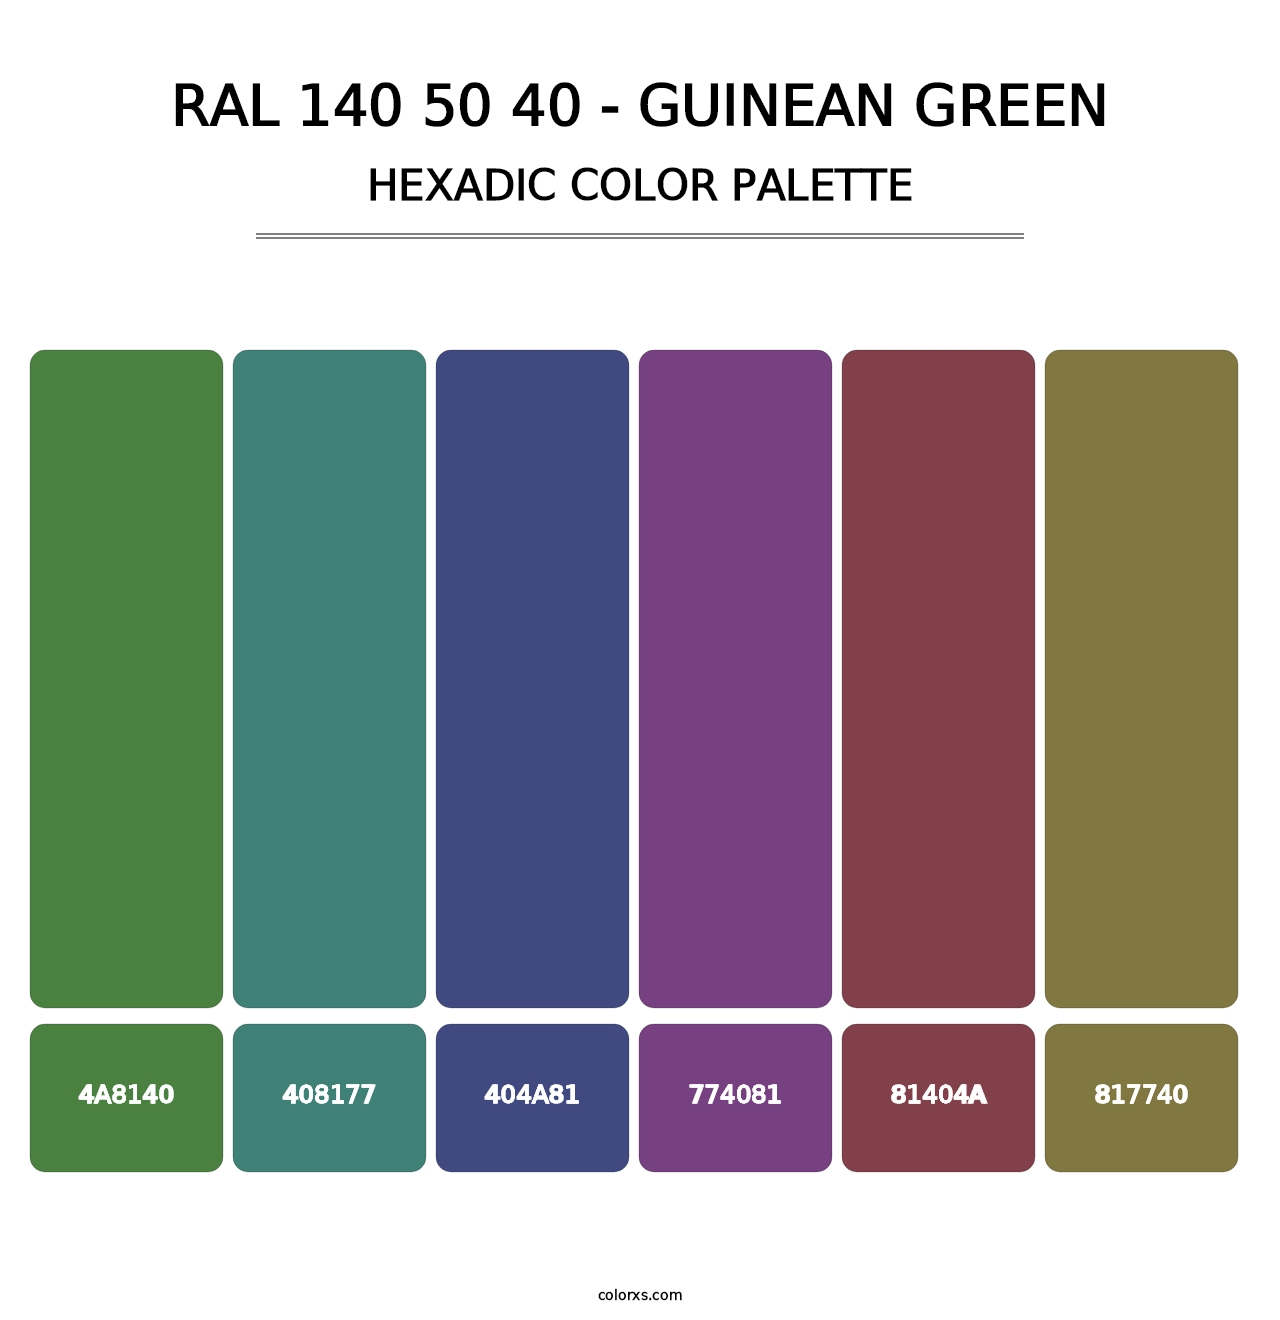 RAL 140 50 40 - Guinean Green - Hexadic Color Palette